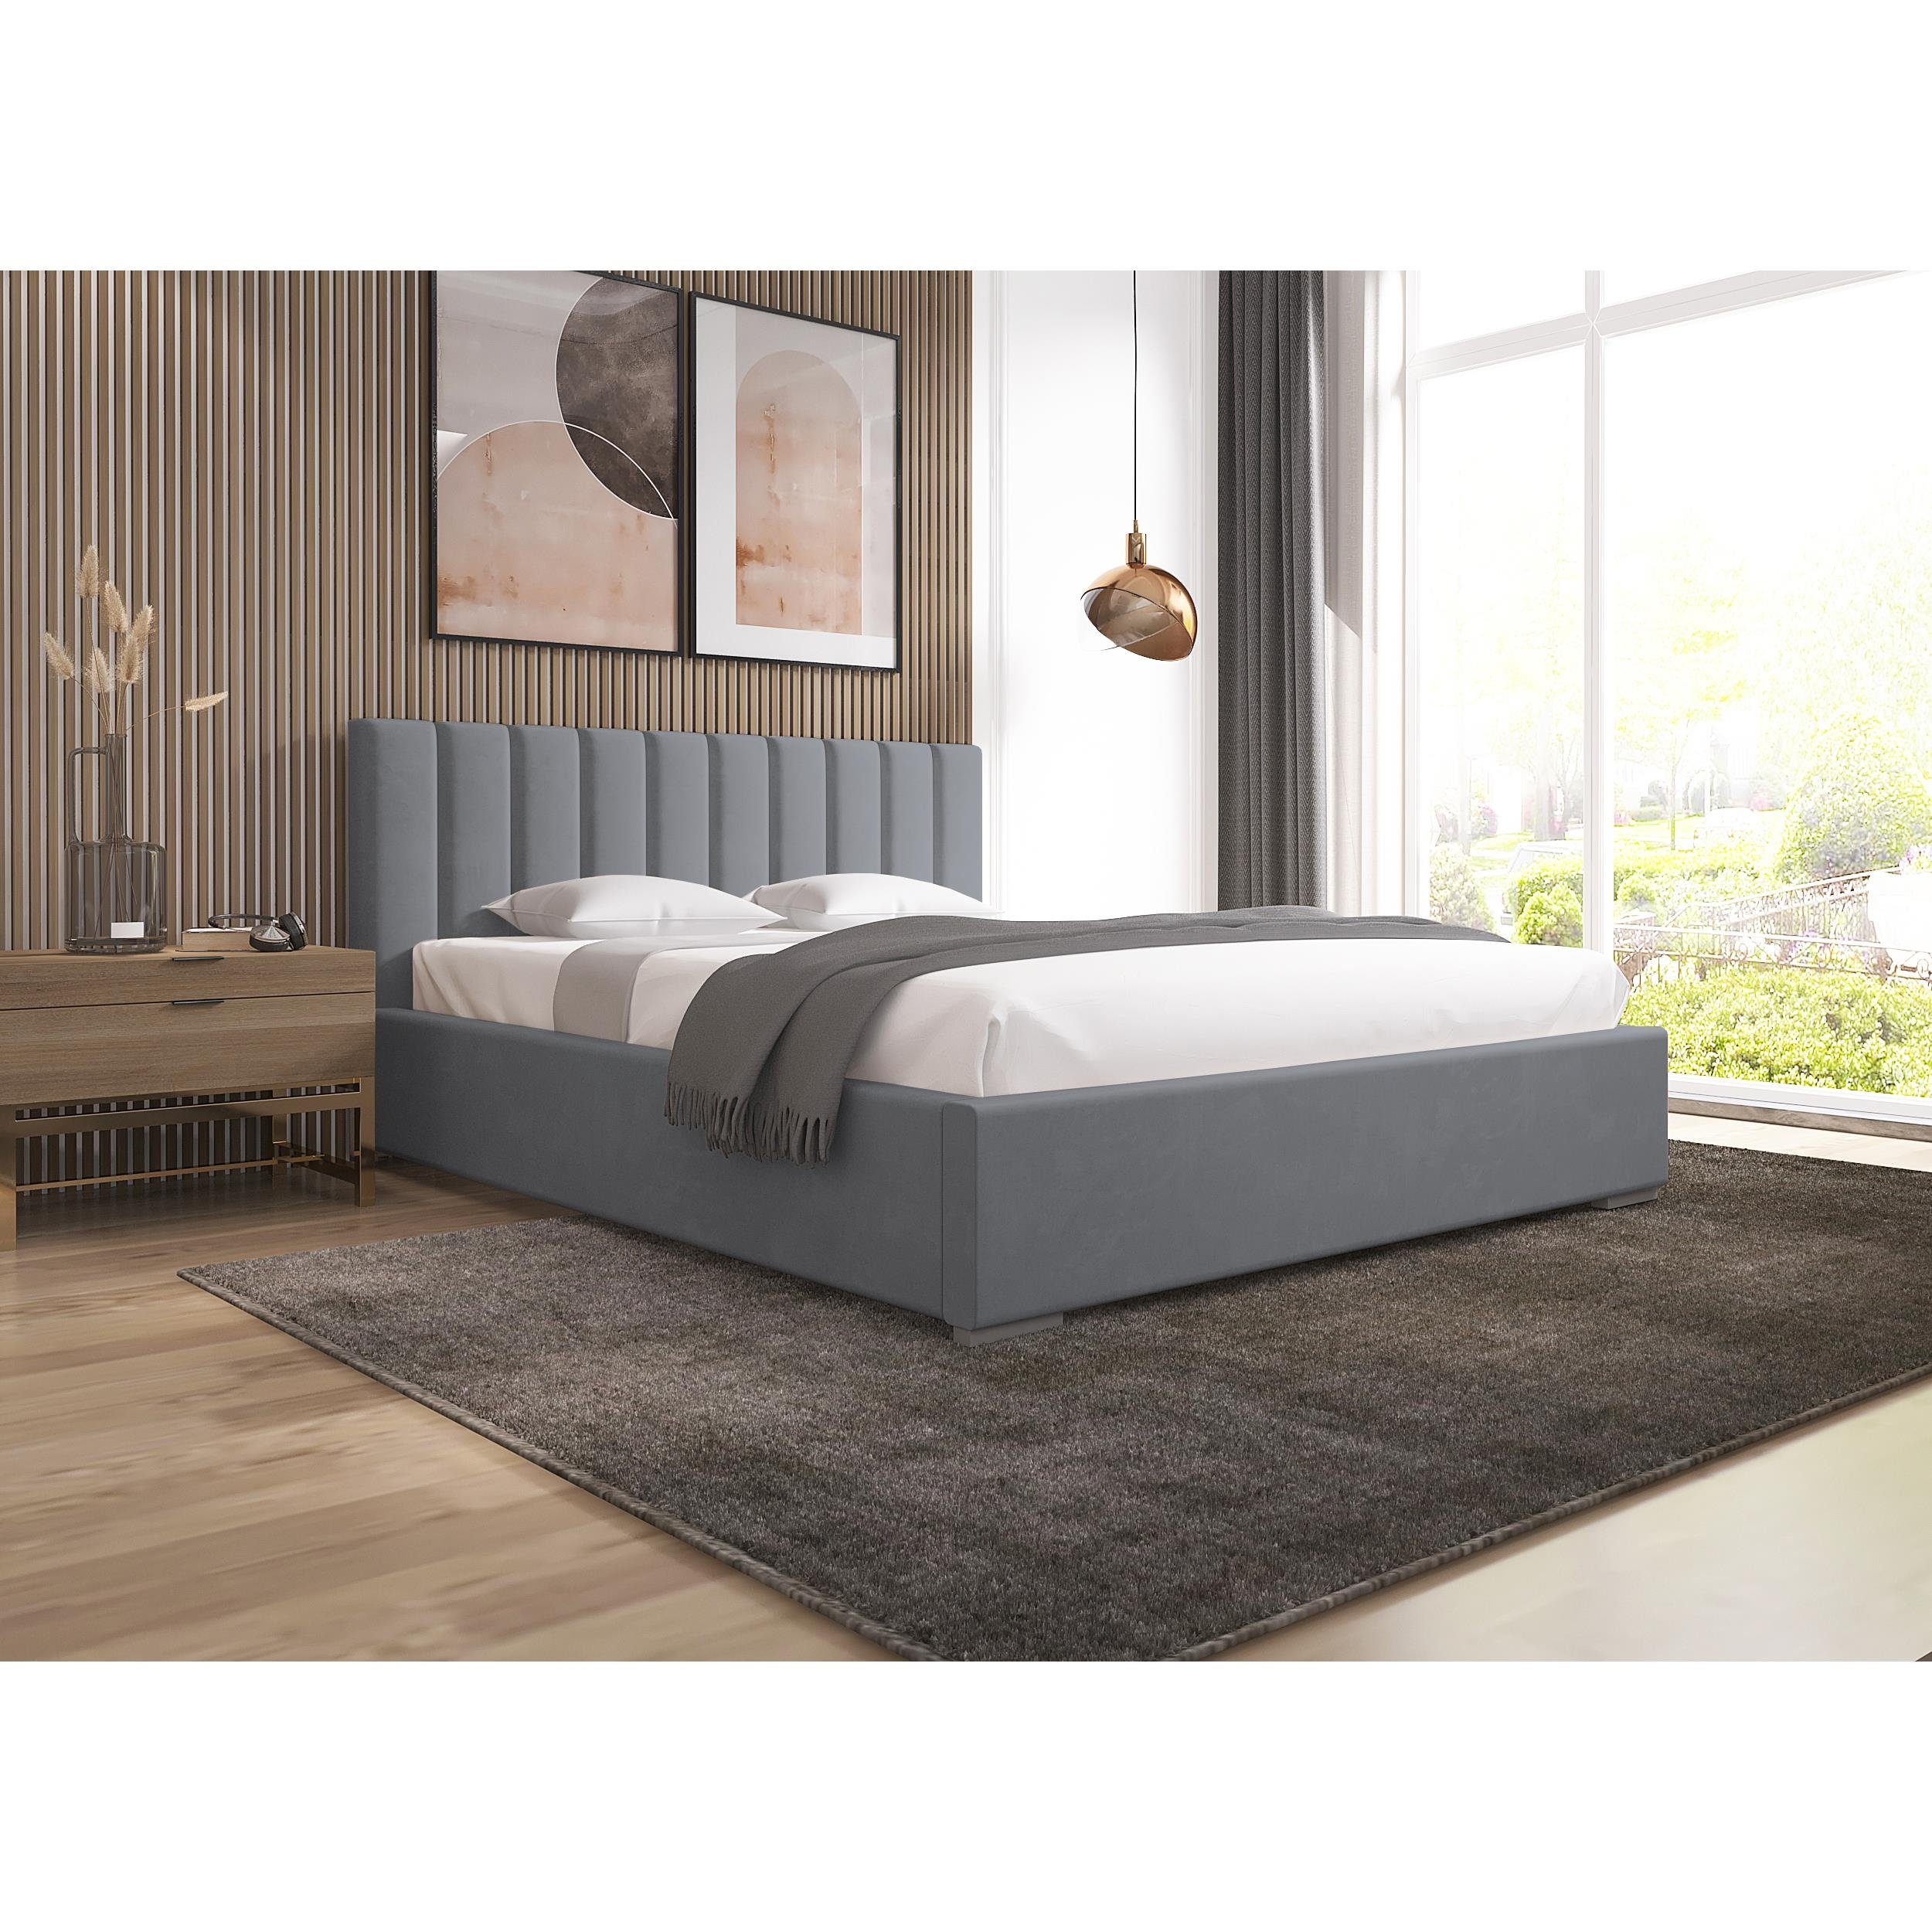 Beautysofa Polsterbett Adeline (stilvoll Bett mit Velvet-Bezug, Beige Polsterbett 120 x 200 cm), mit Bettkasten, mit Holzgestell Grau (mono 245)